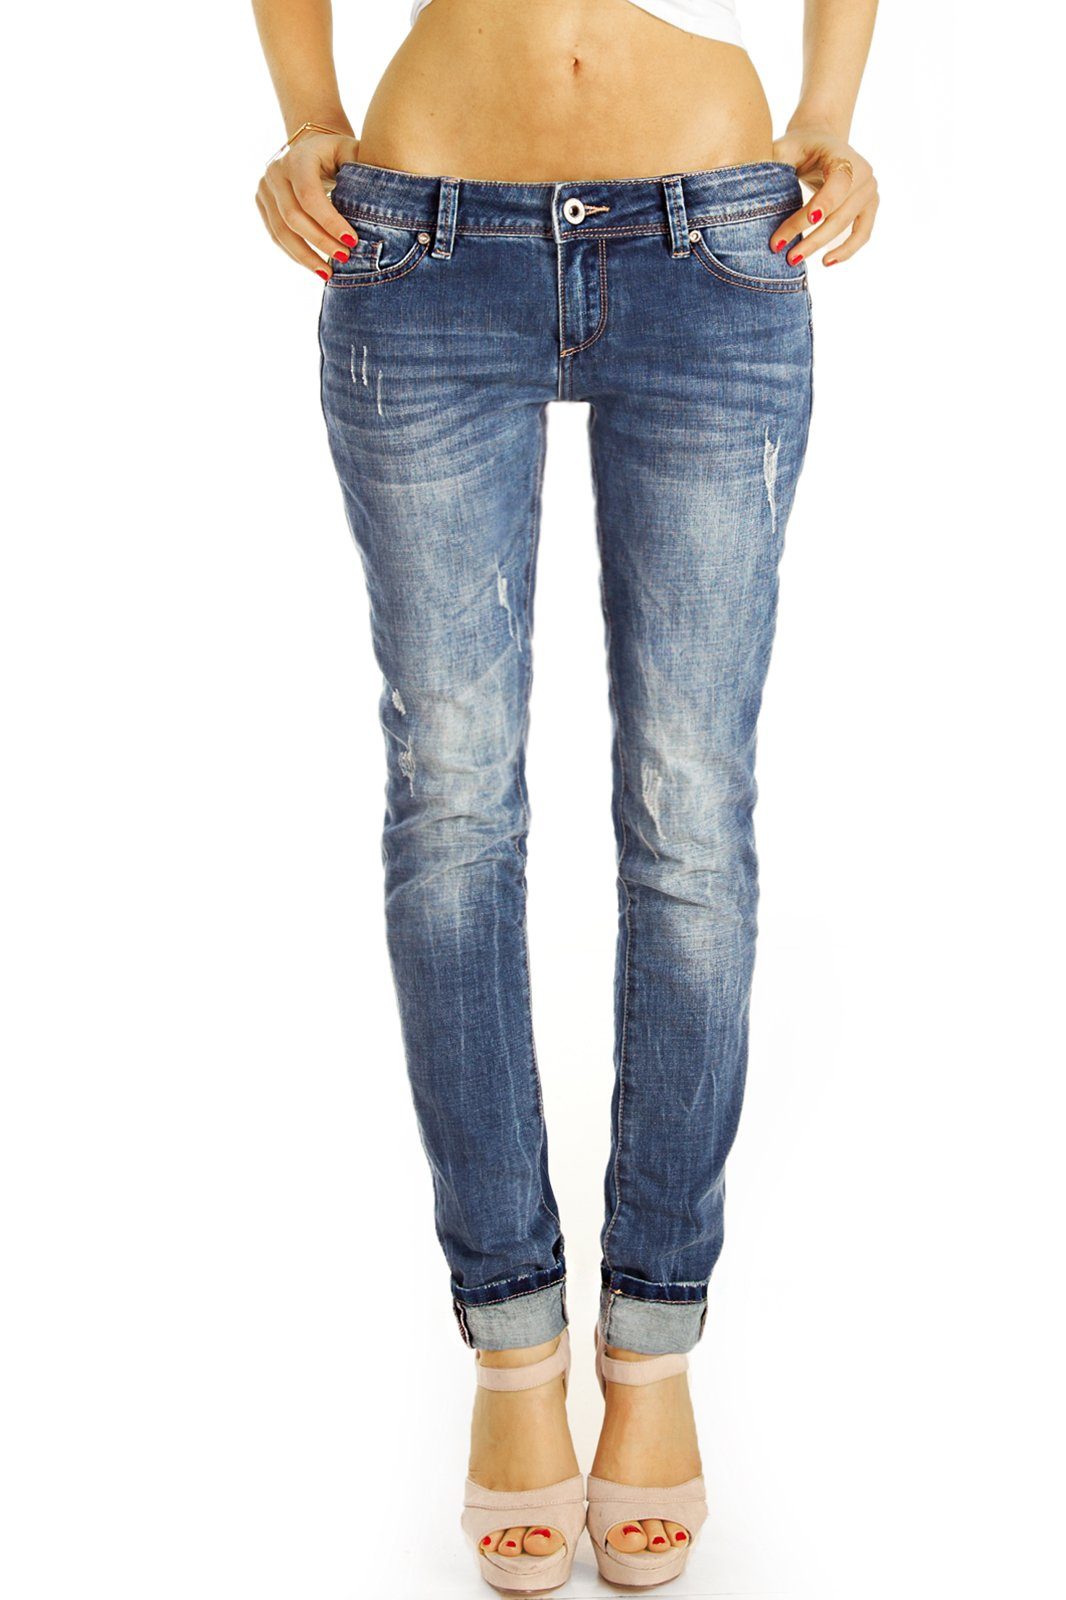 Hüftjeans Stretchanteil, j24k-2 used mit - Look, Jeans Destroyed Low styled Hose Destroyed-Jeans - Waist be 5-Pocket-Style Frauen